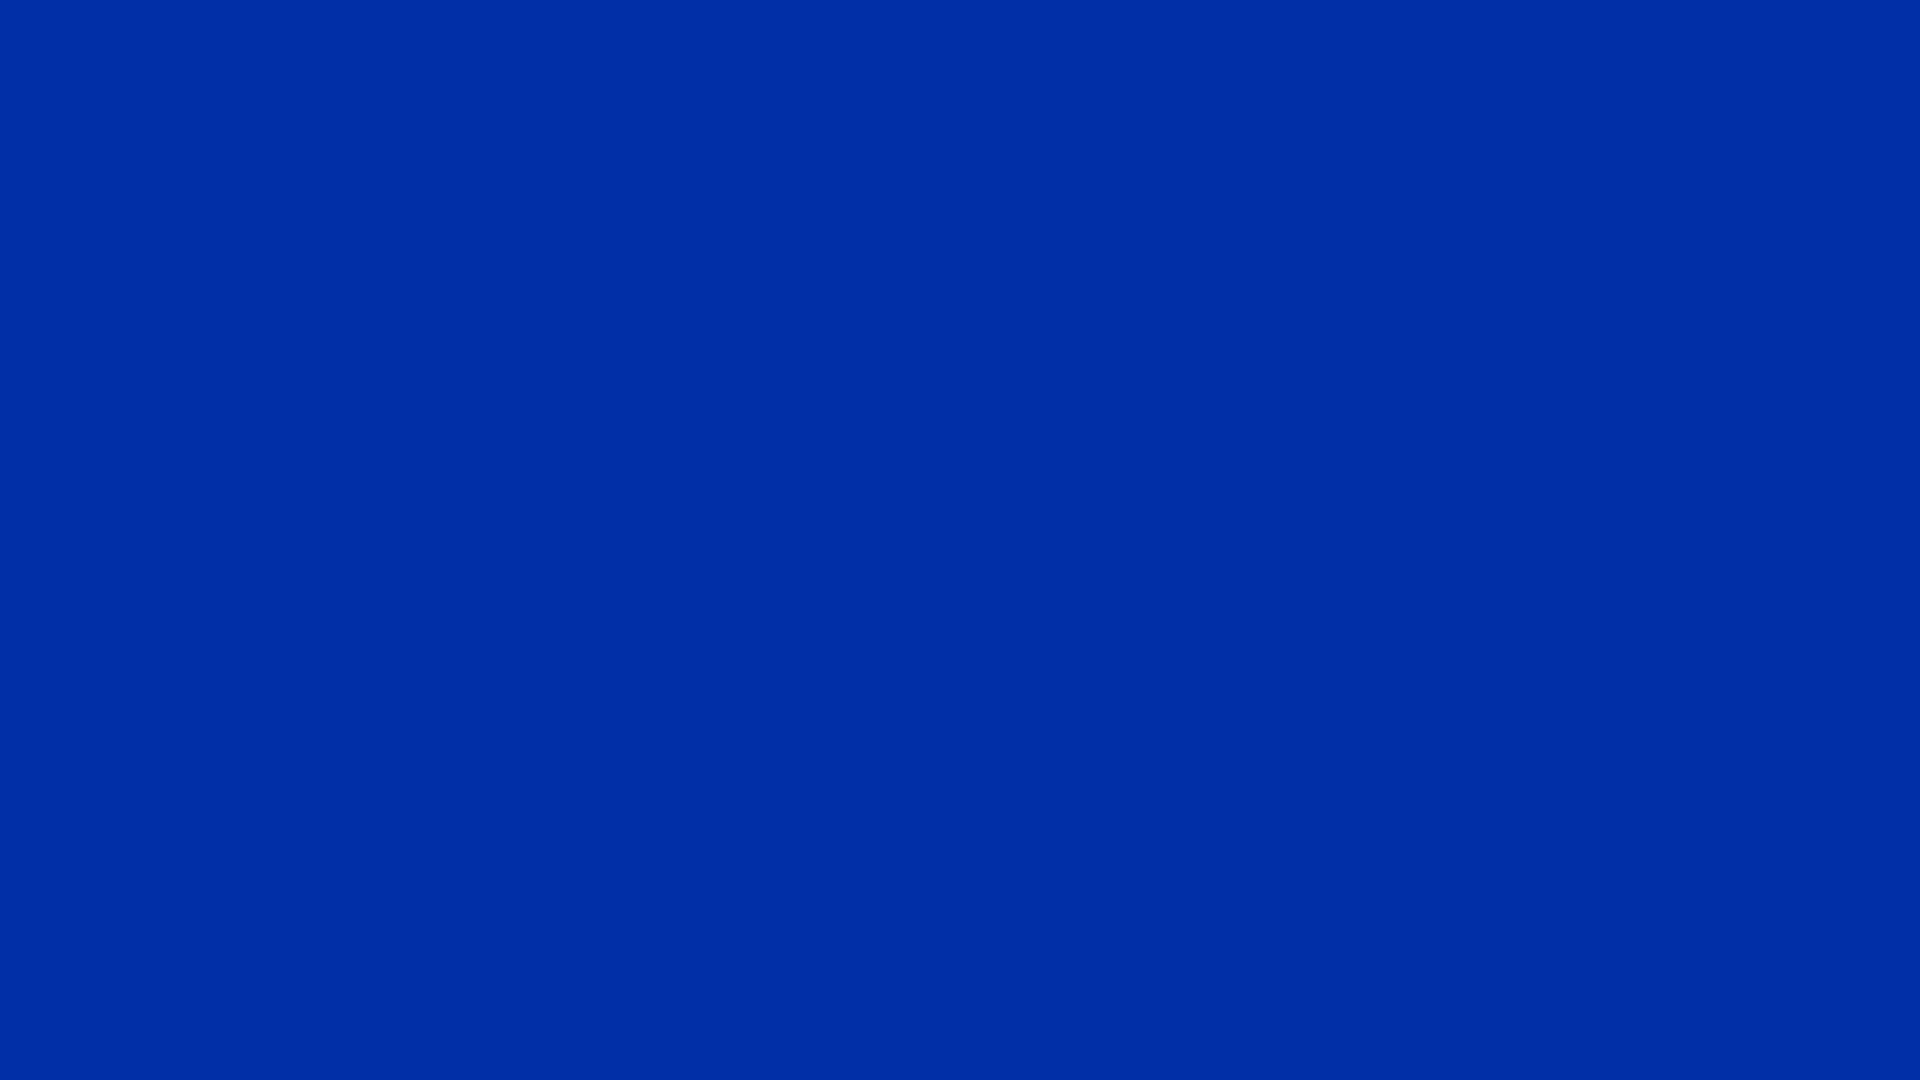 International Klein Blue   Wallpaper High Definition High Quality